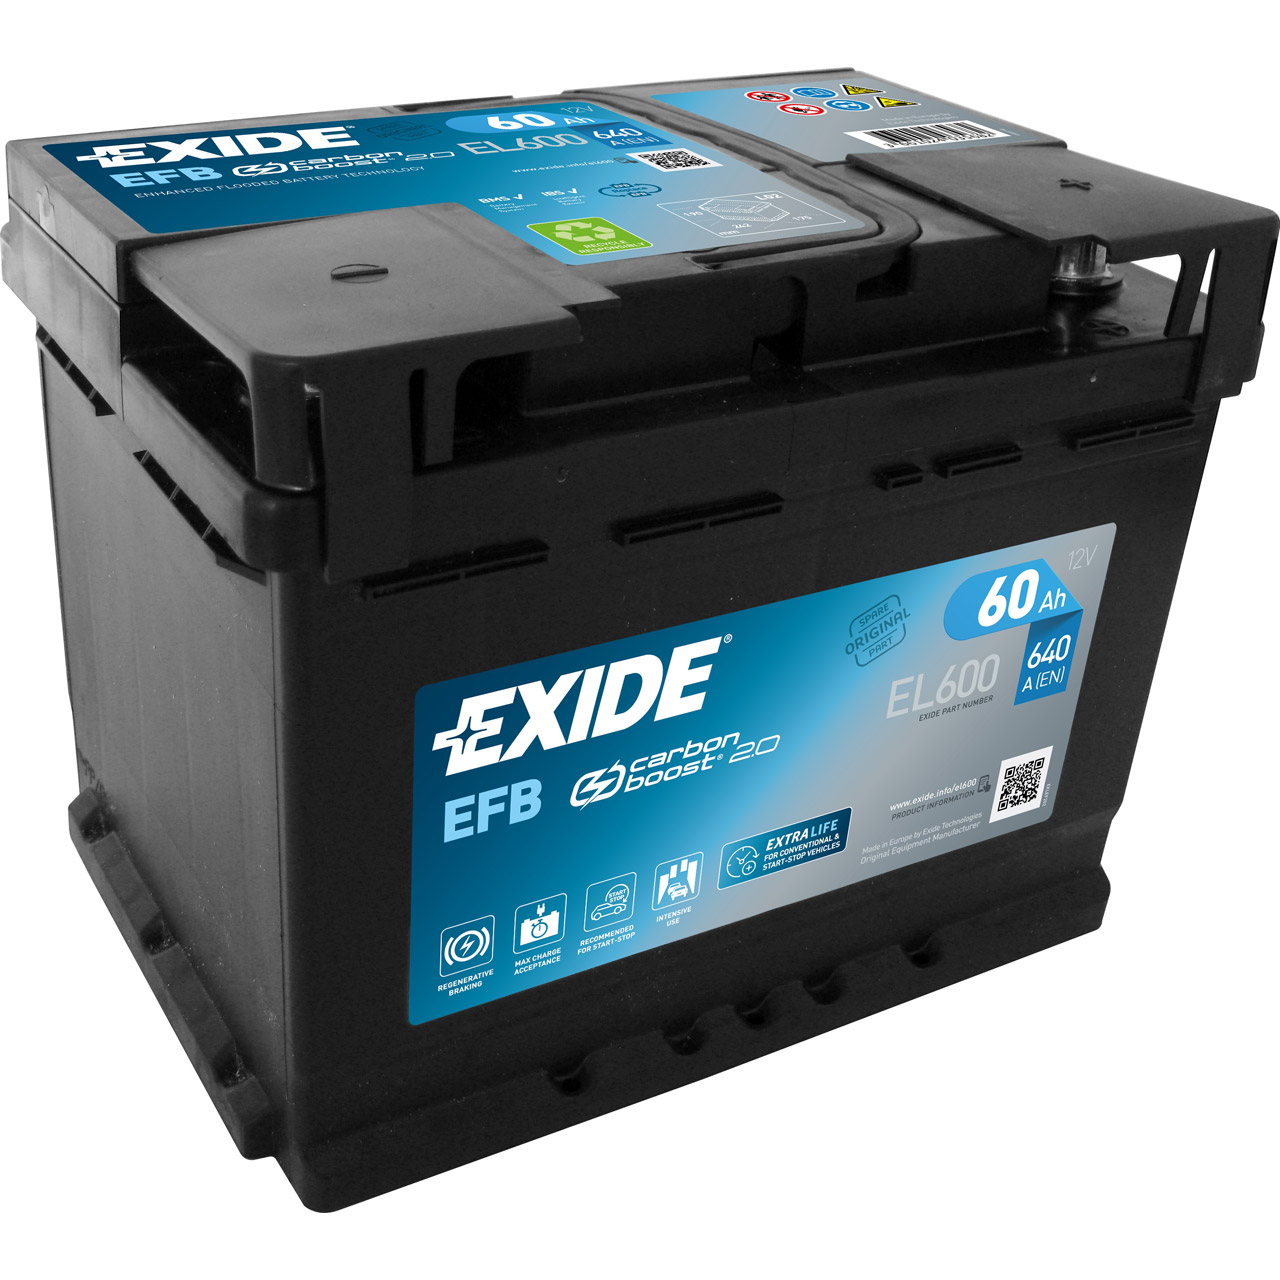 EXIDE Starterbatterien / Autobatterien - EL600 